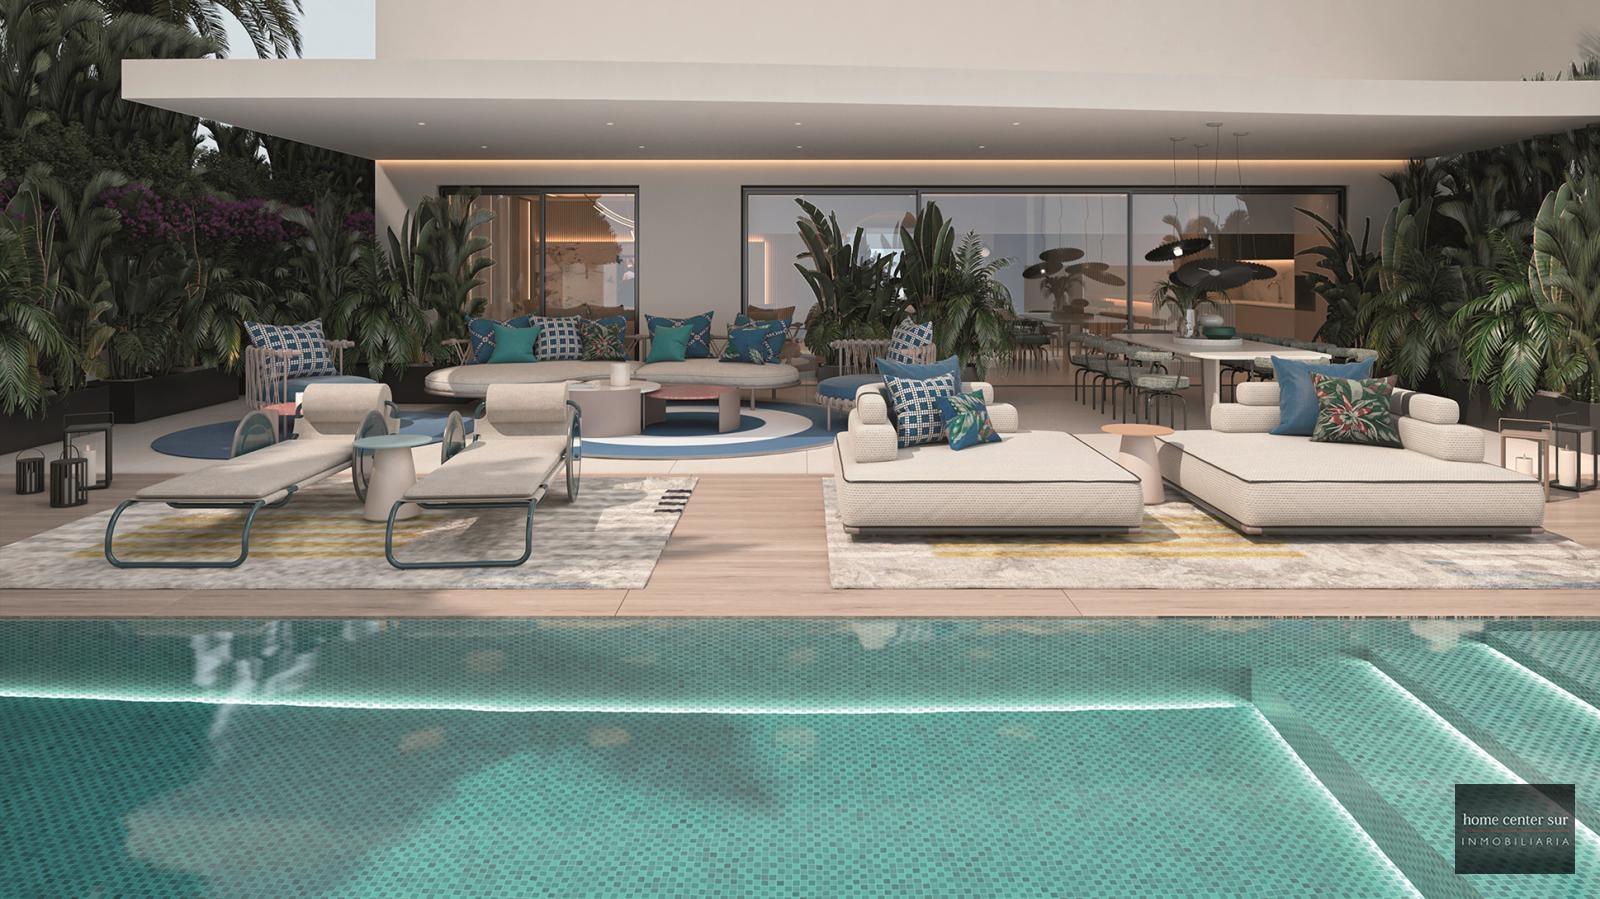 Apartament de Luxe en venda a calle Bonanza 0 (Marbella), 2.600.000 €